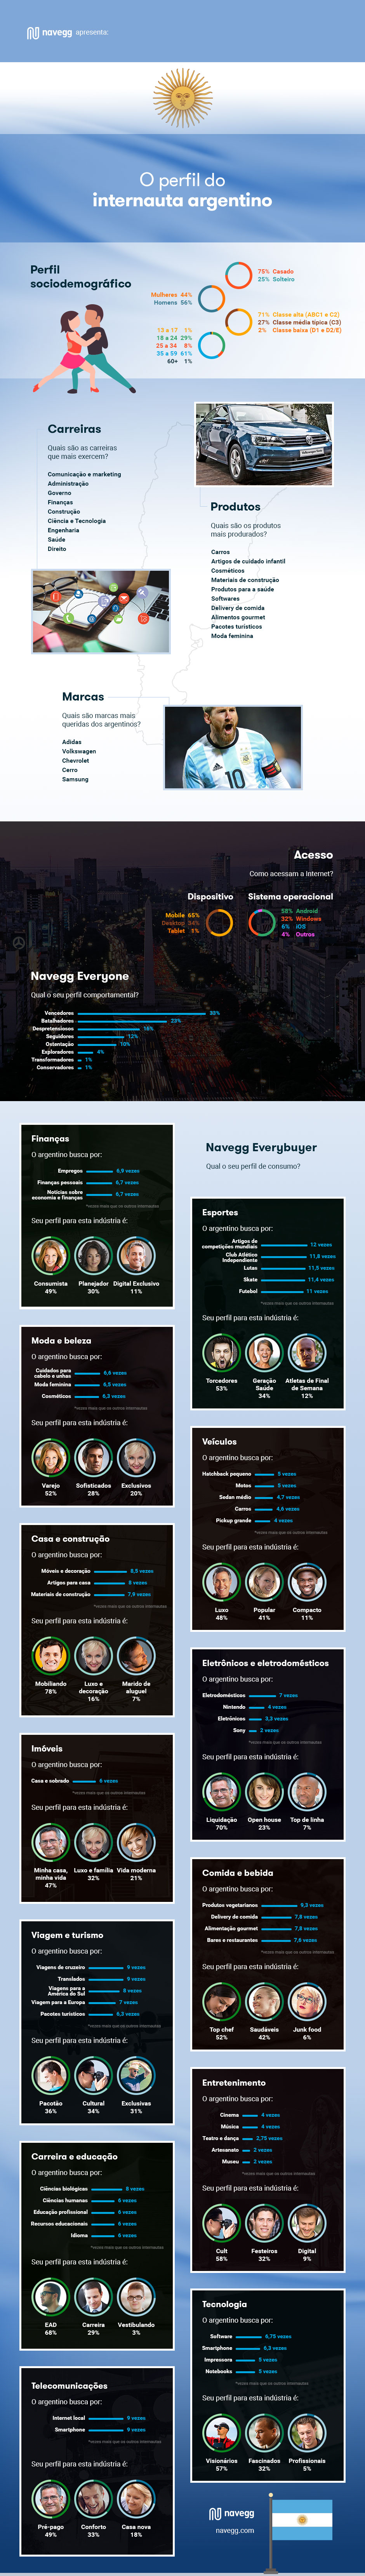 navegg-infografico-perfil-do-internauta-argentino